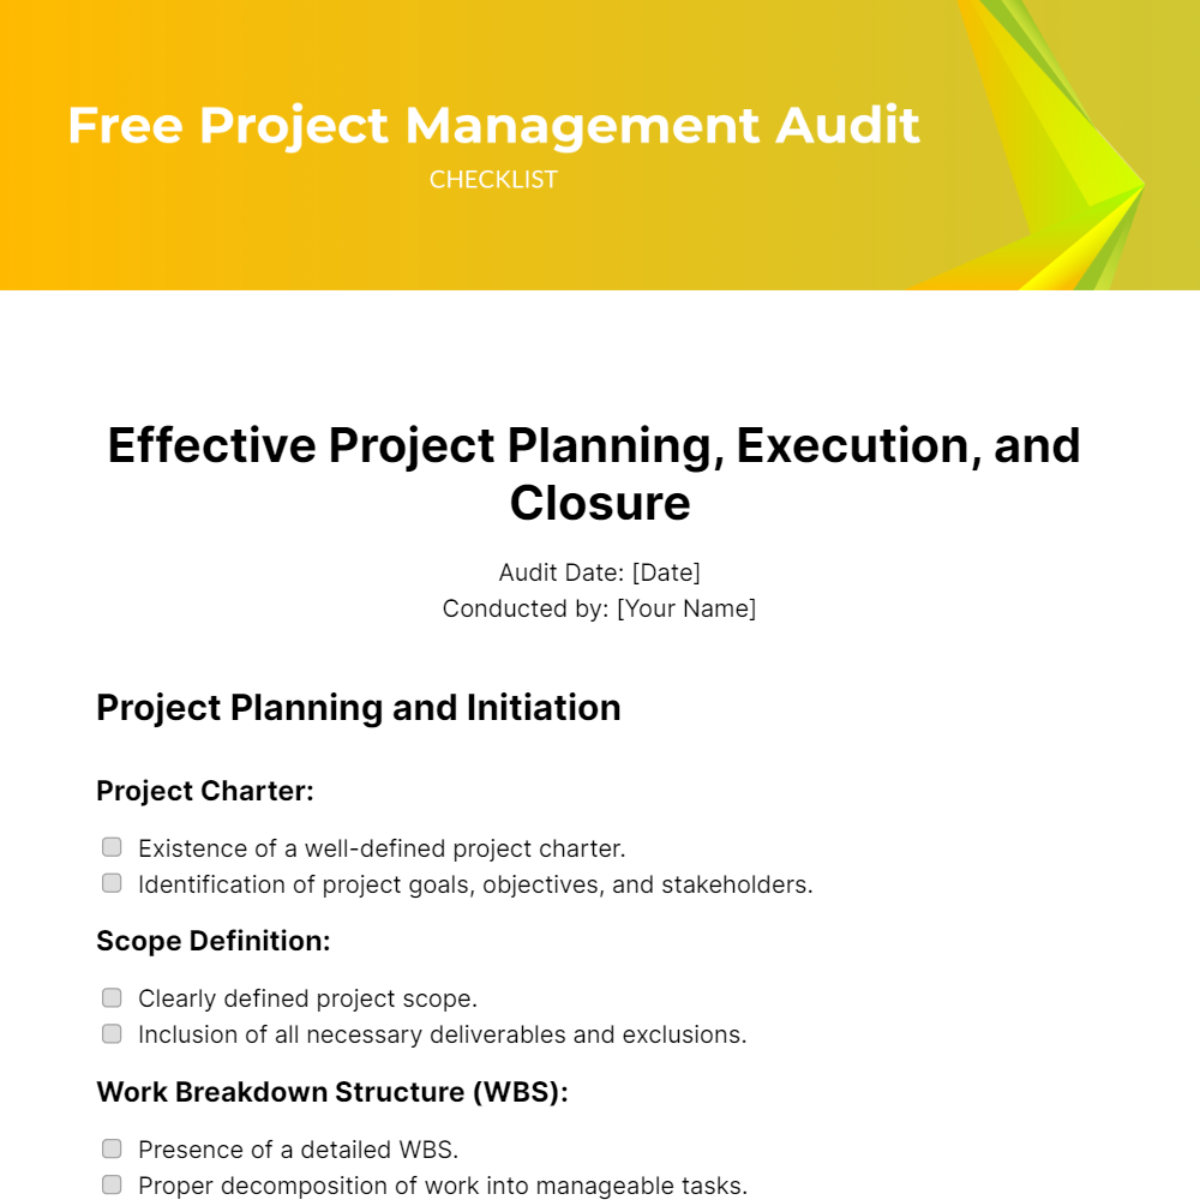 Free Project Management Audit Checklist Template